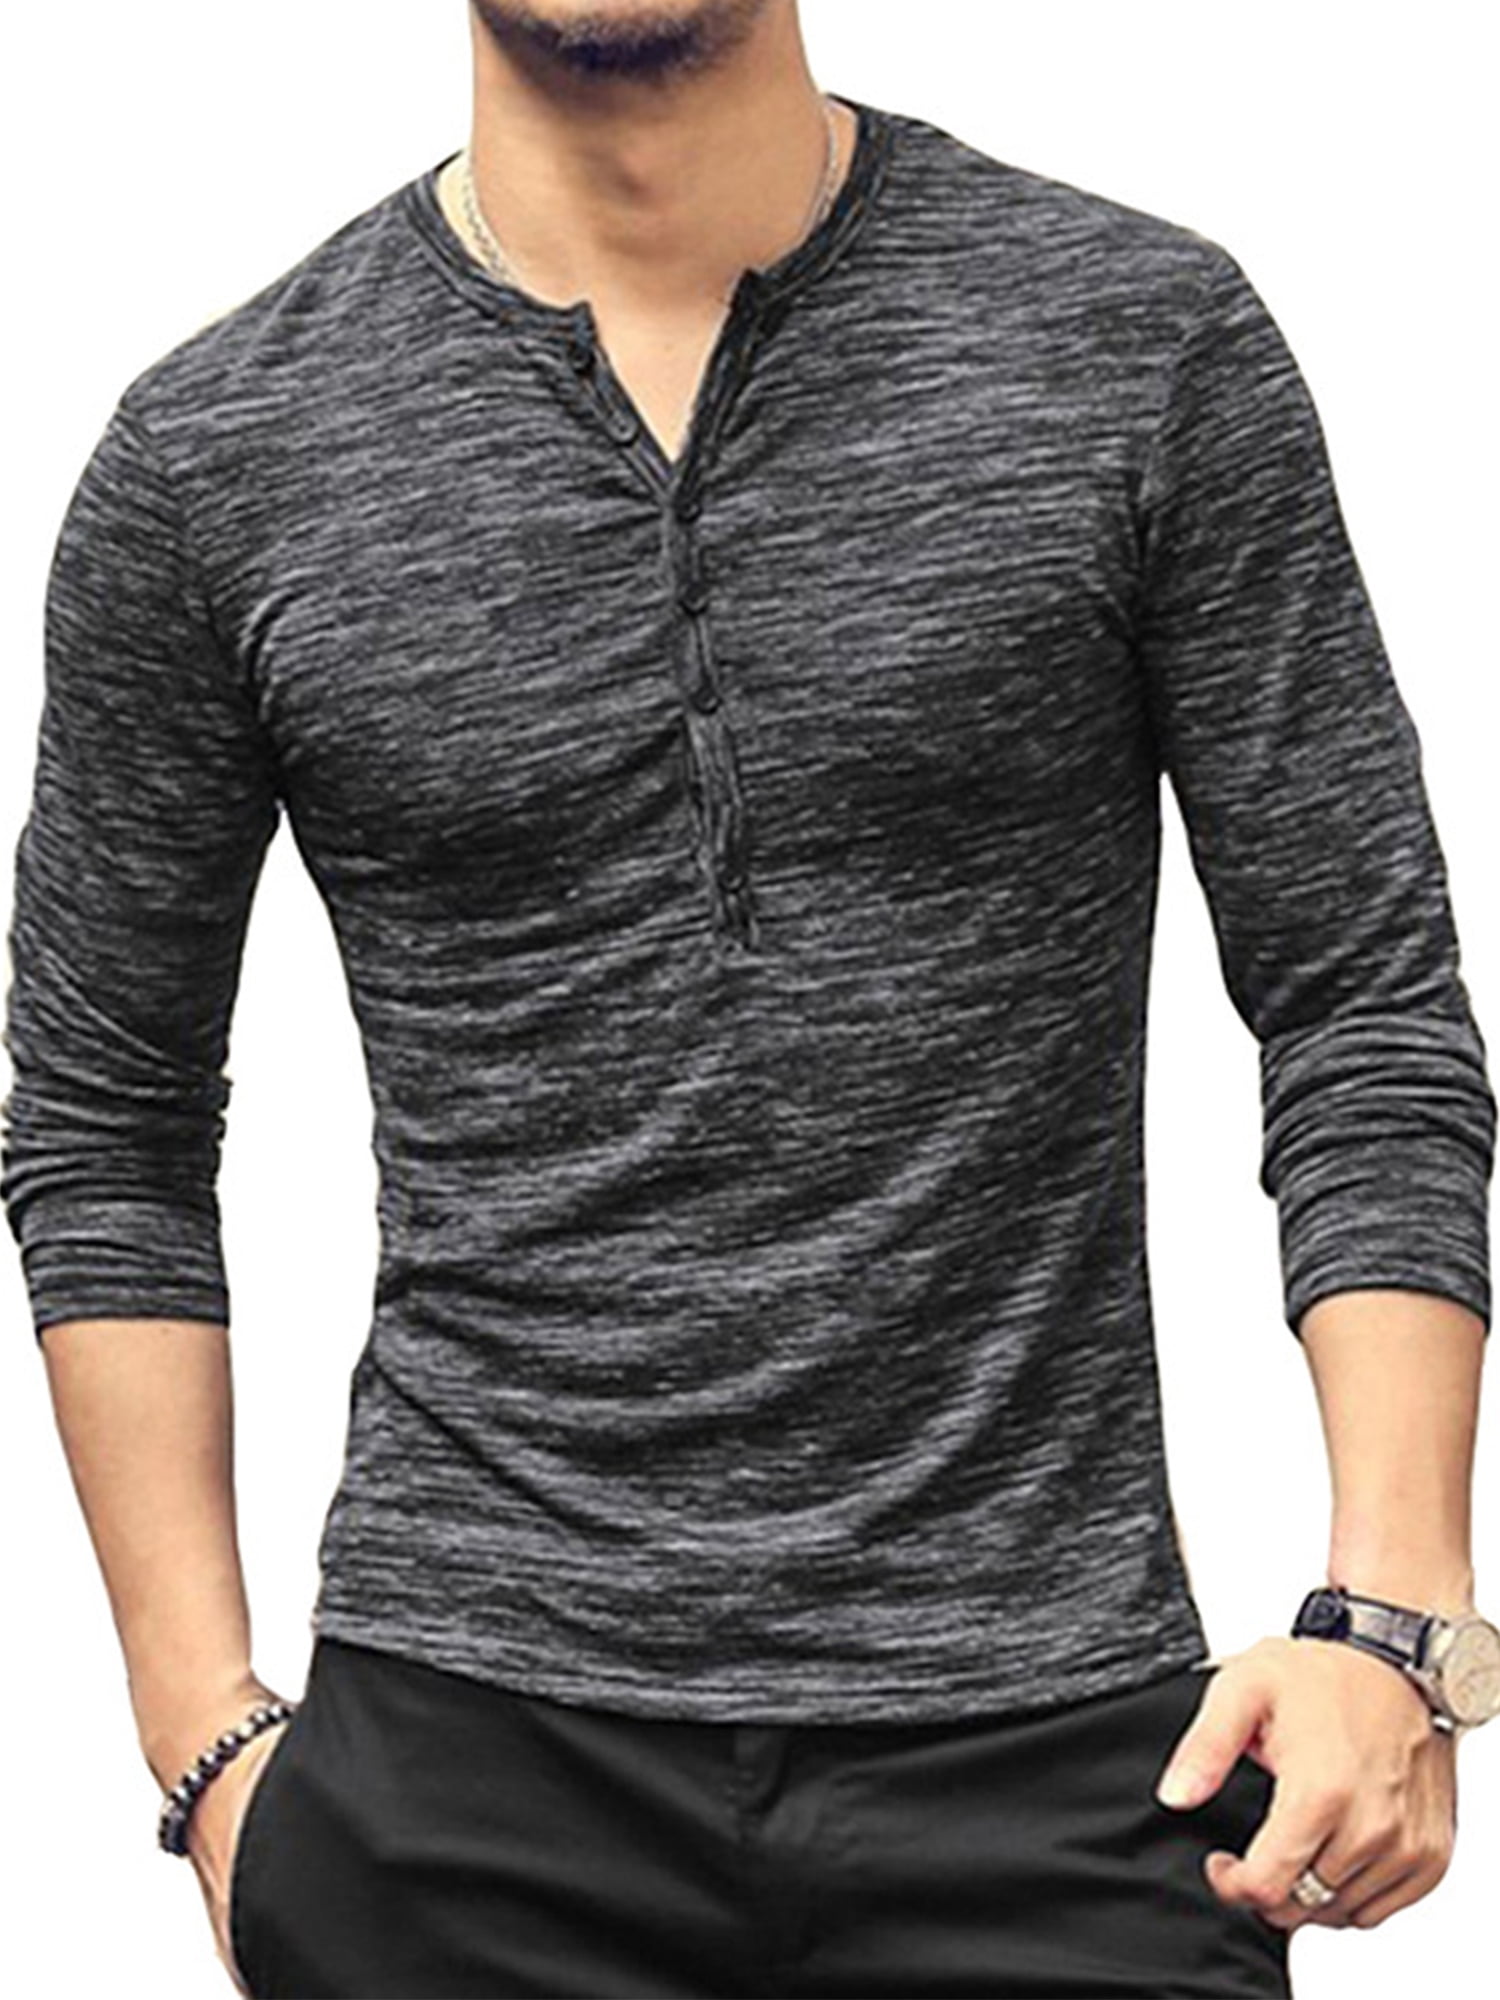 Summer Men's Half Sleeve T-Shirt Tops V Neck Stand collar Blouses Pullover New B